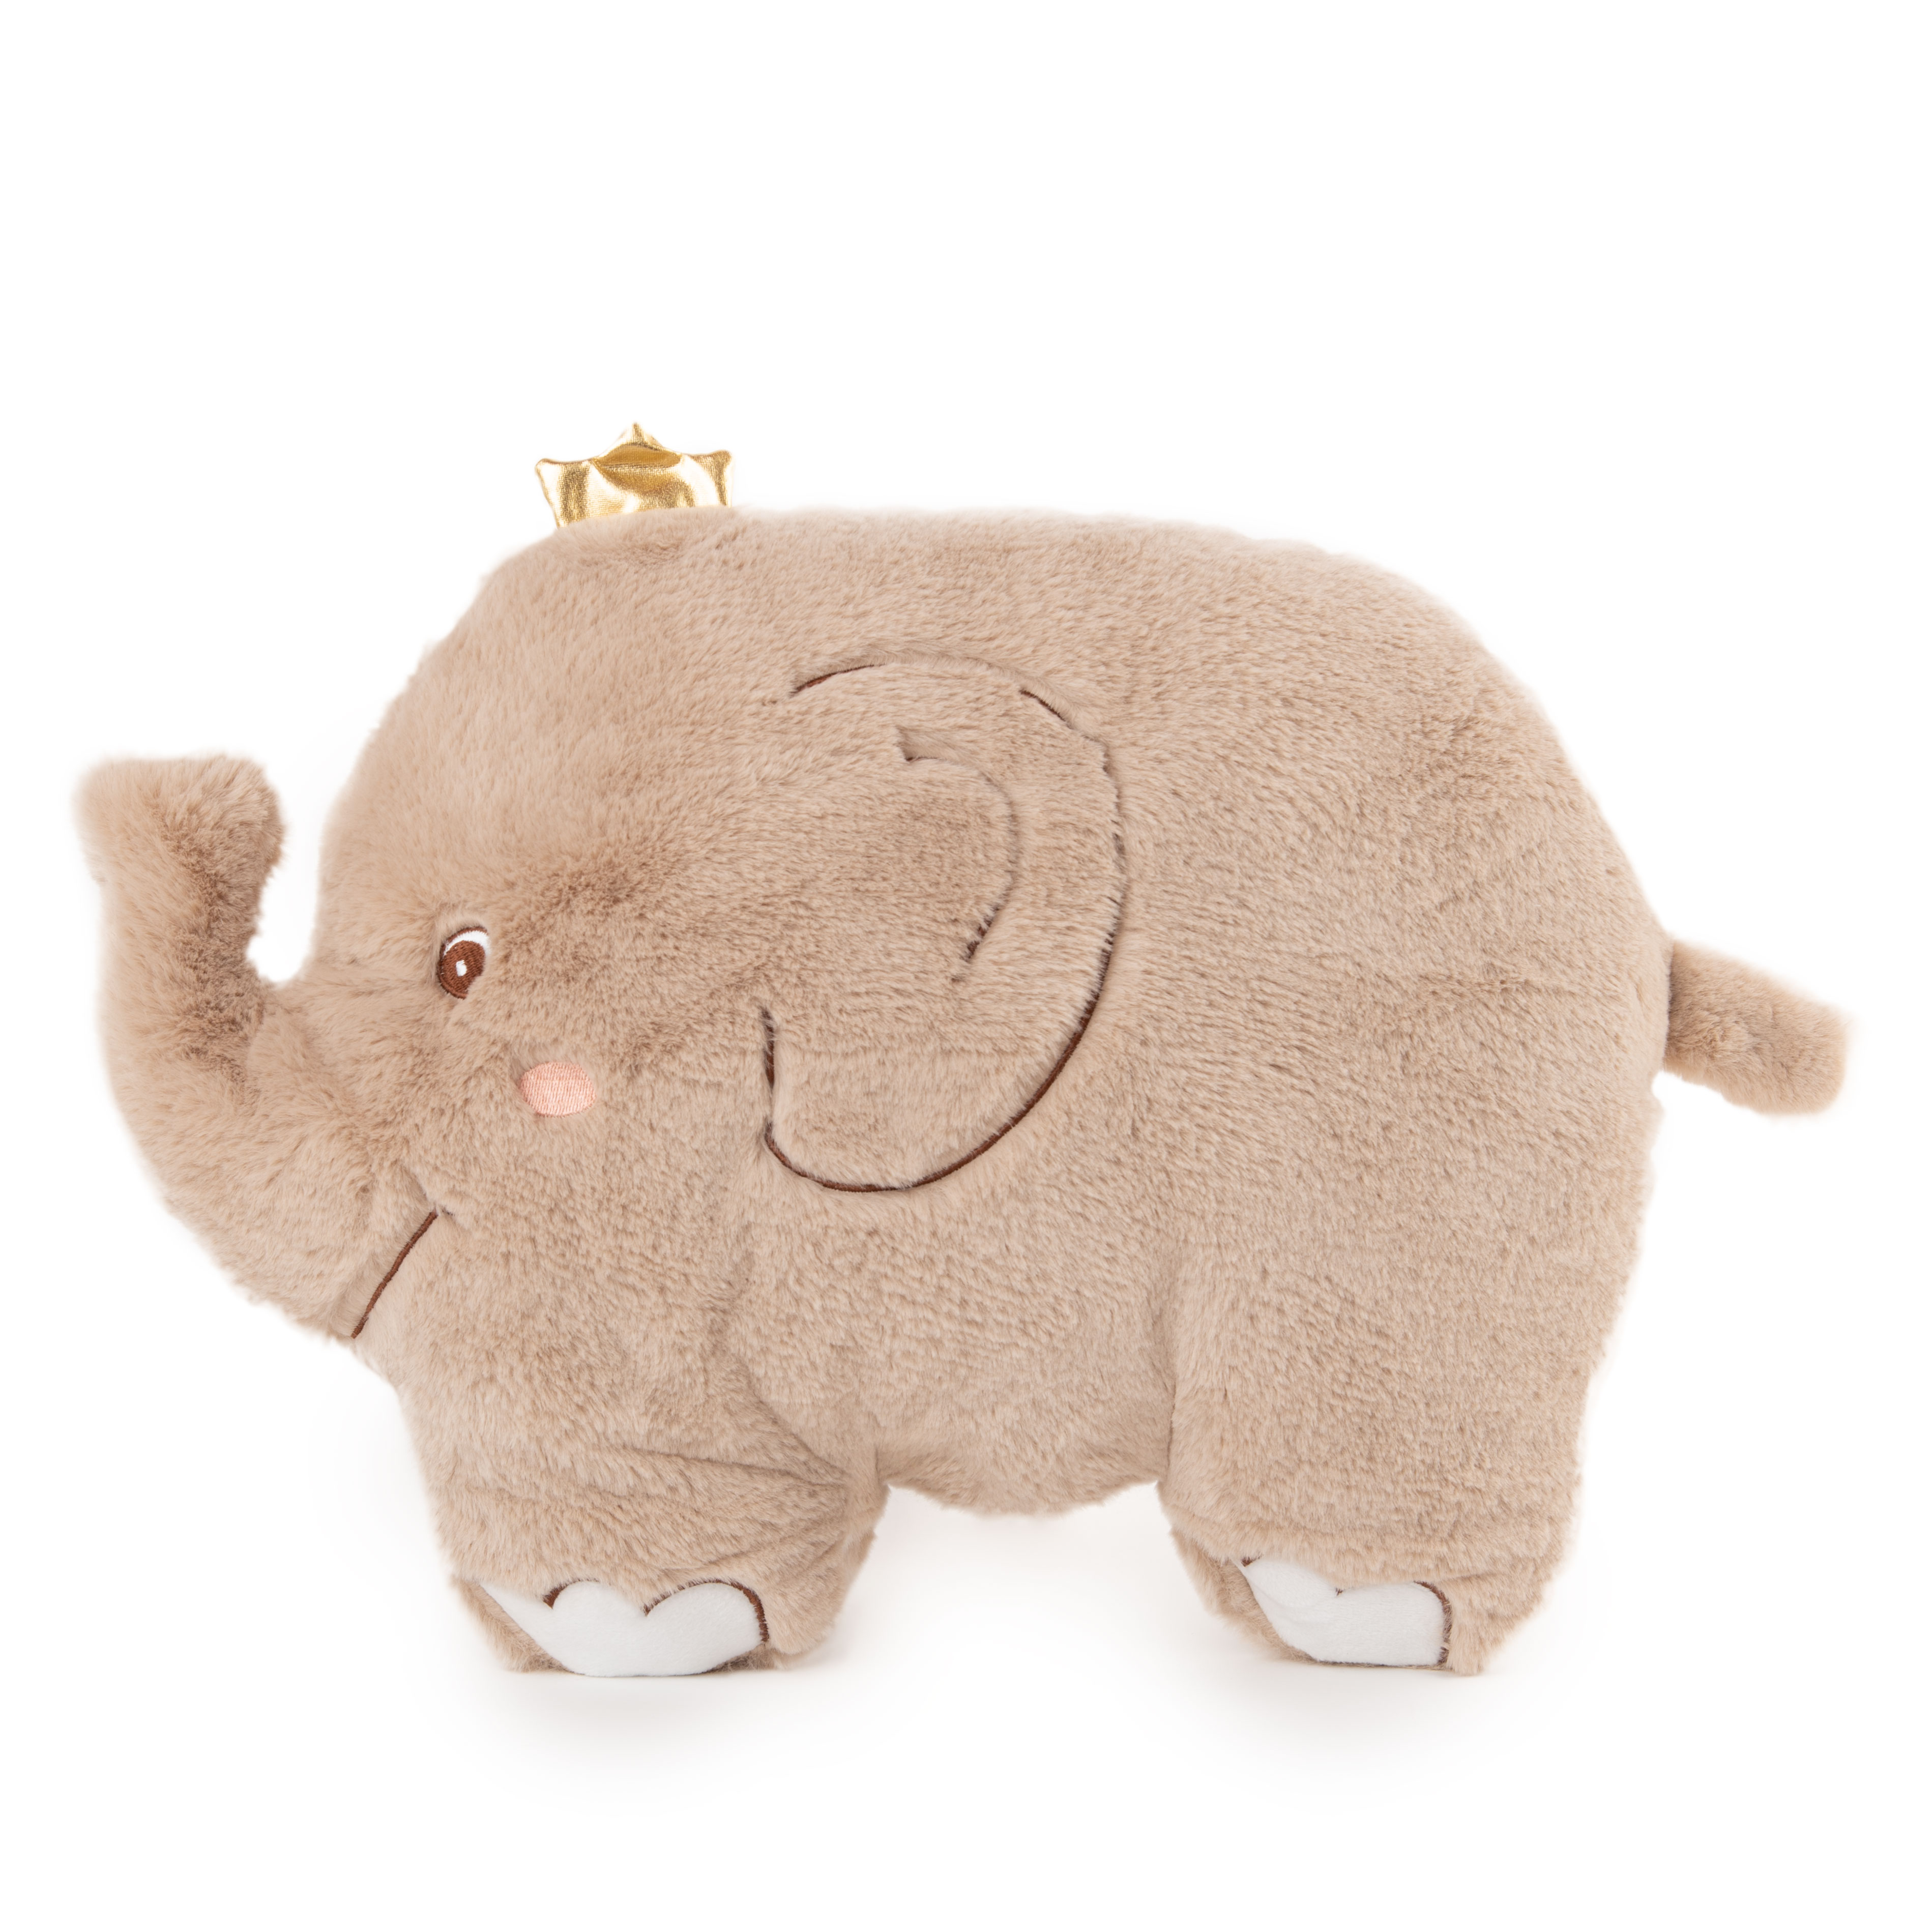 Elephant pillow - Beige